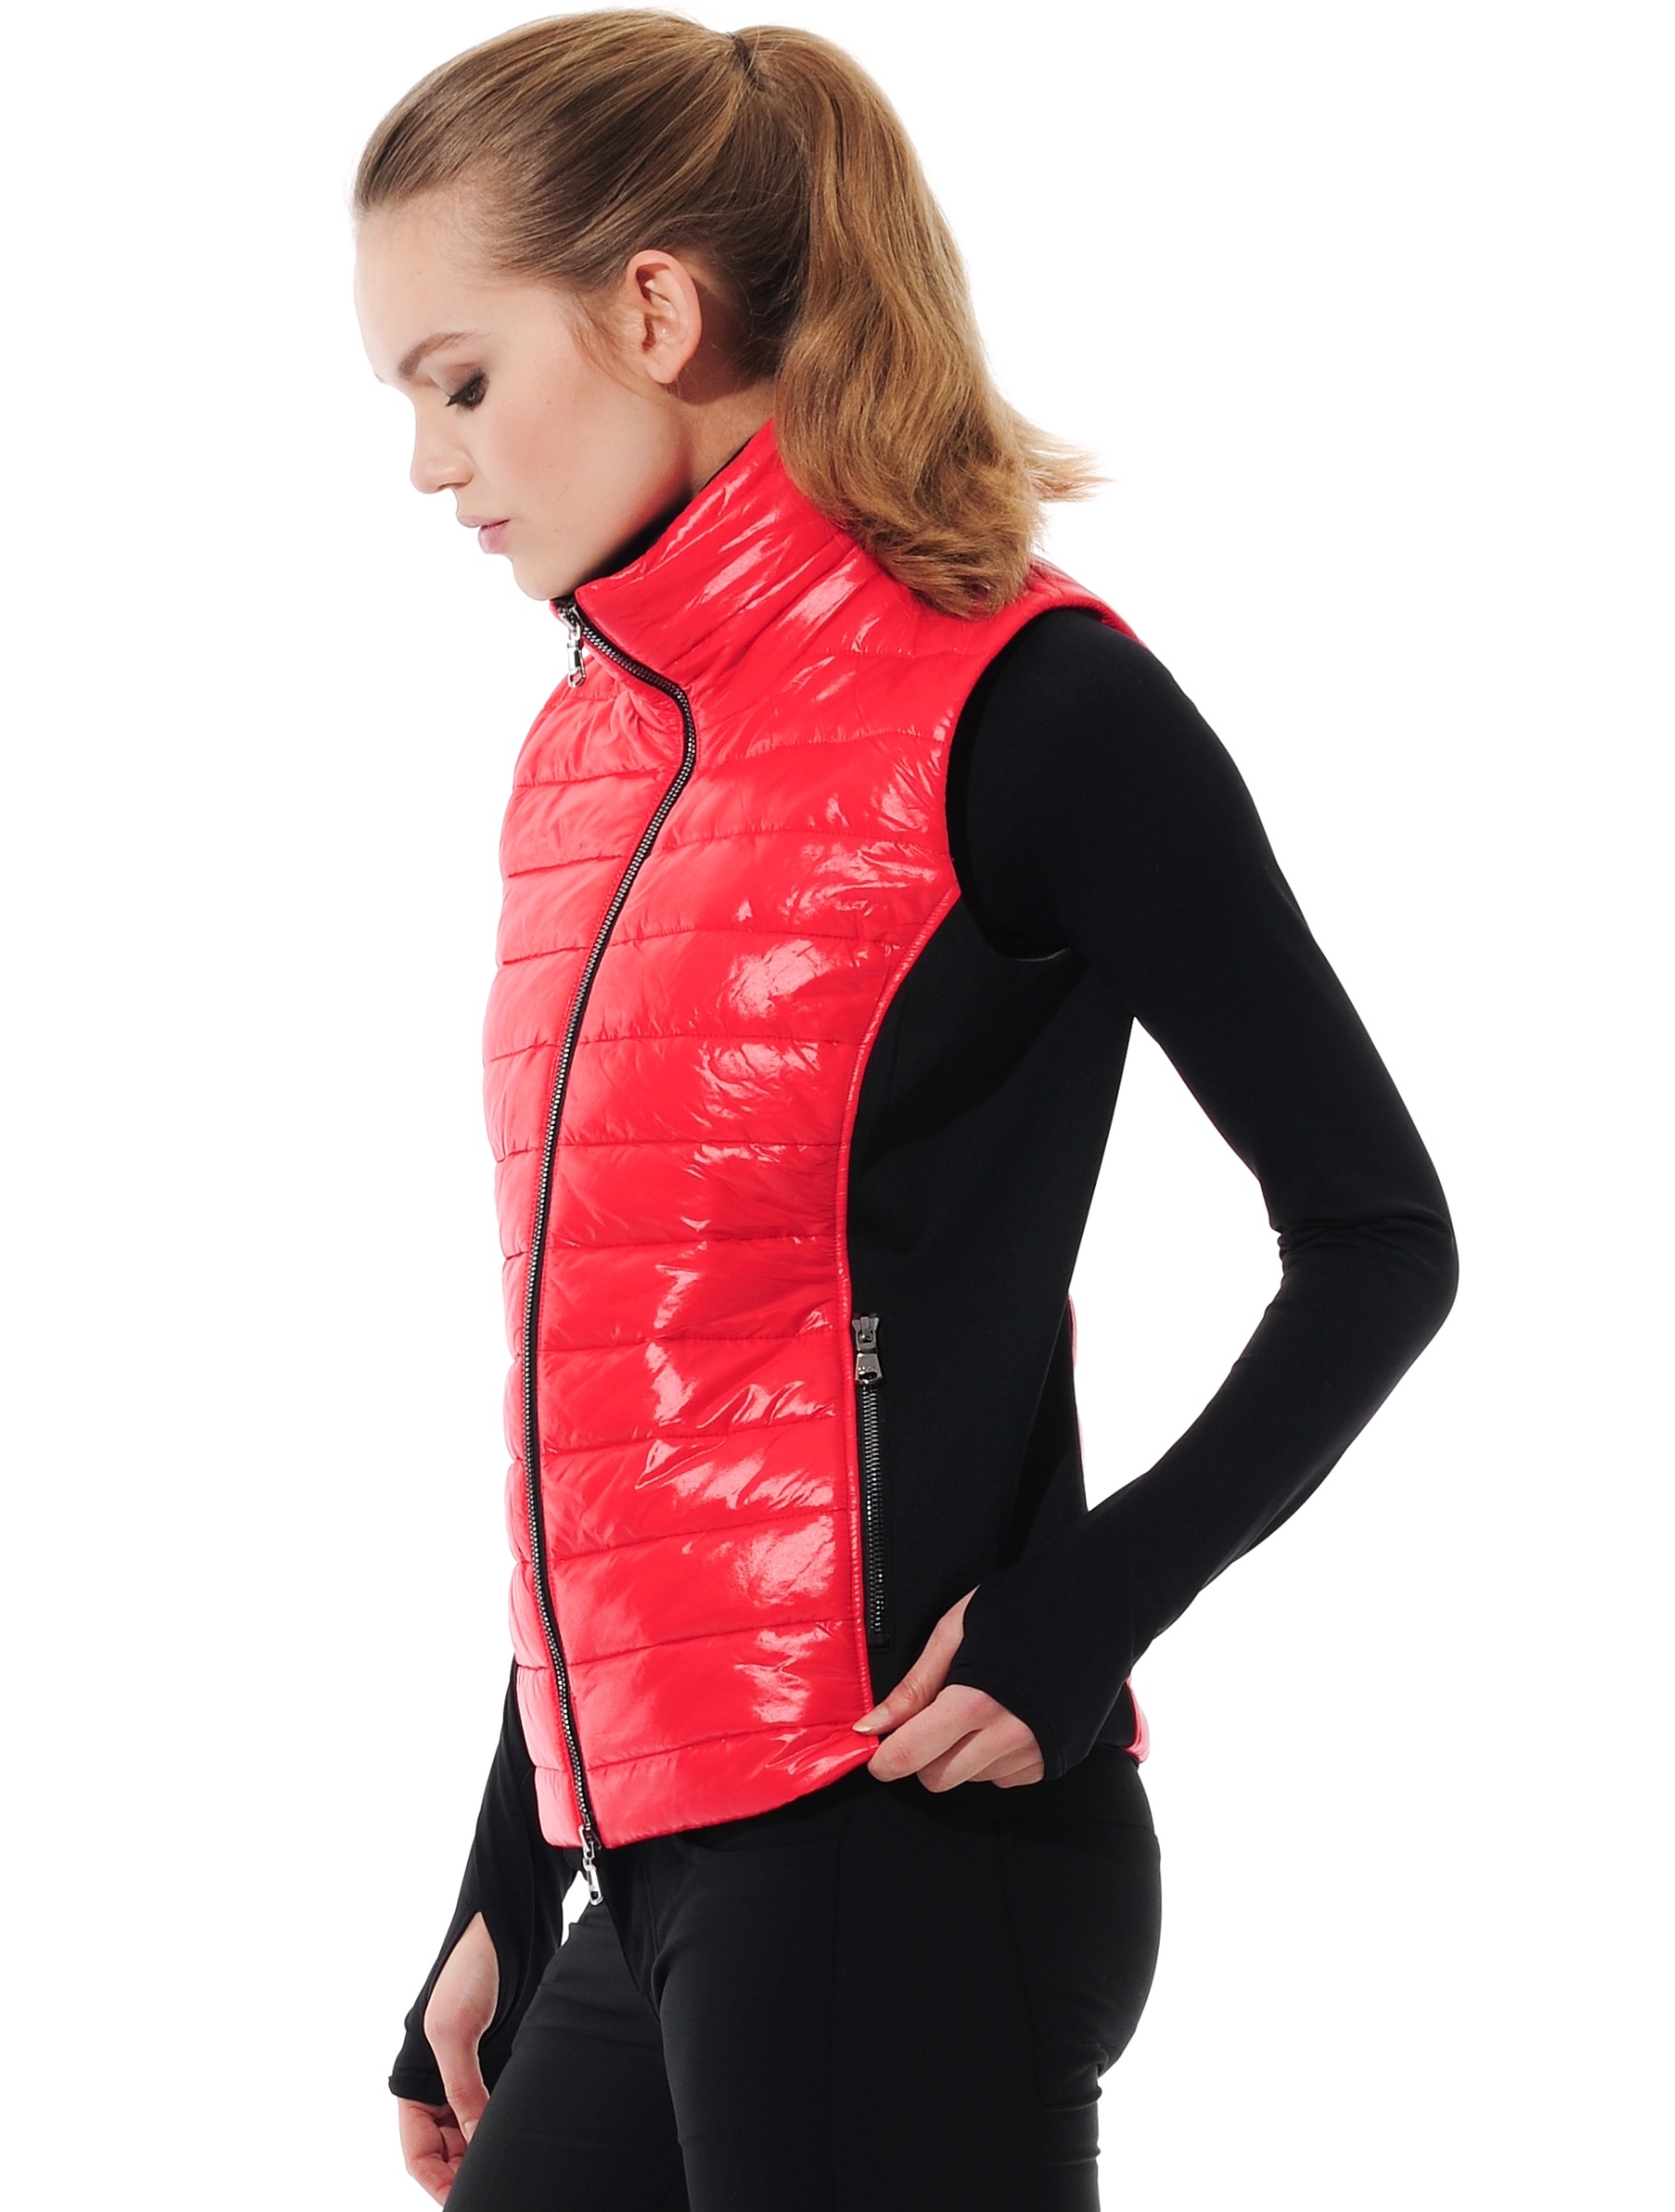 shiny power stretch vest red/black 